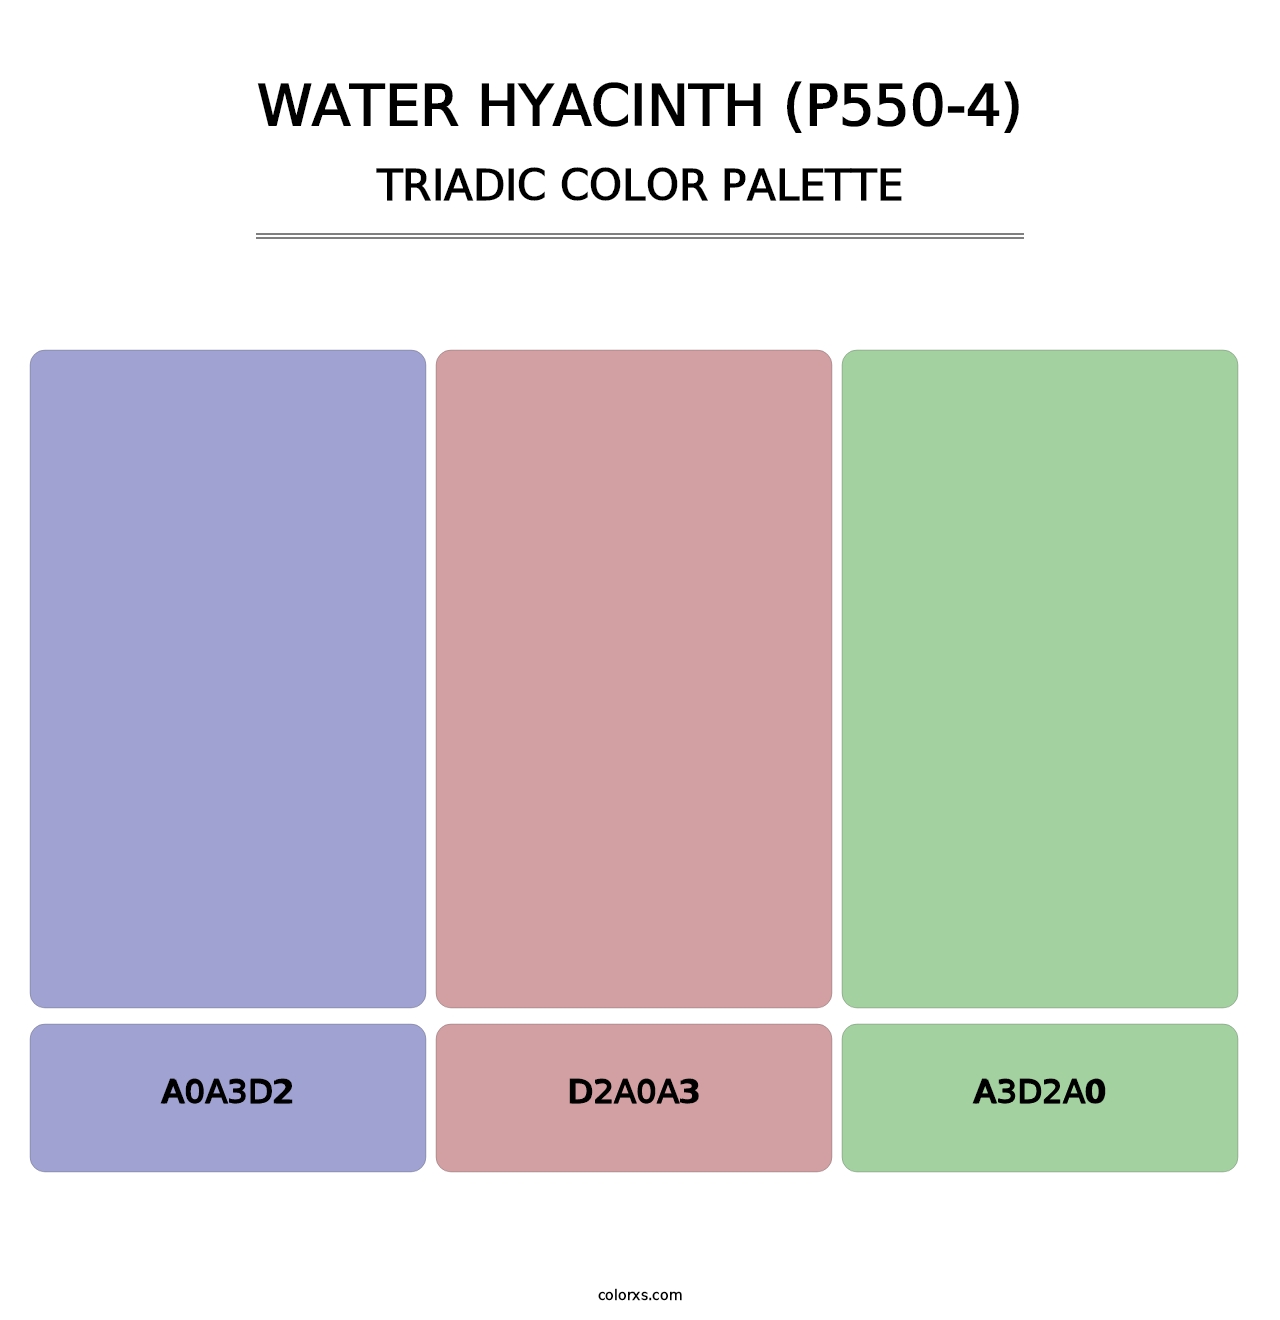 Water Hyacinth (P550-4) - Triadic Color Palette